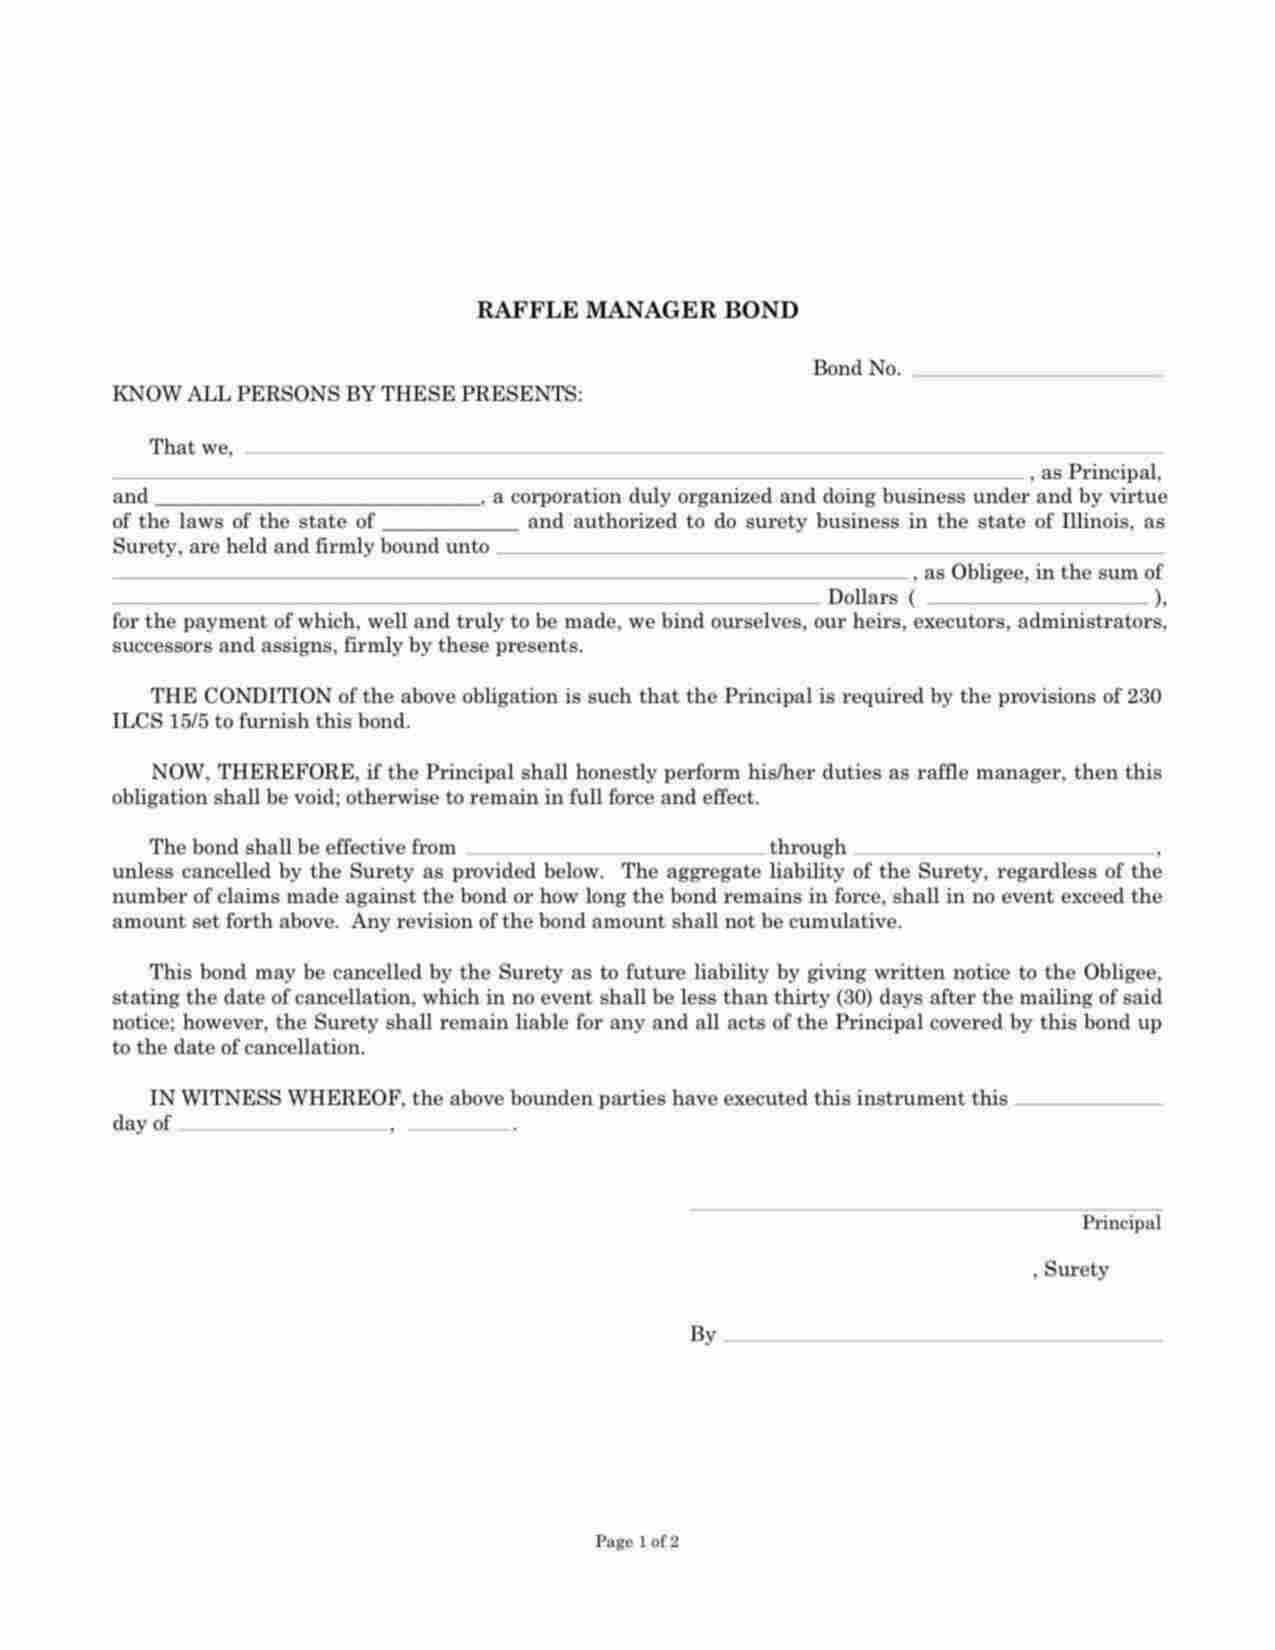 Illinois Raffle Manager Bond Form